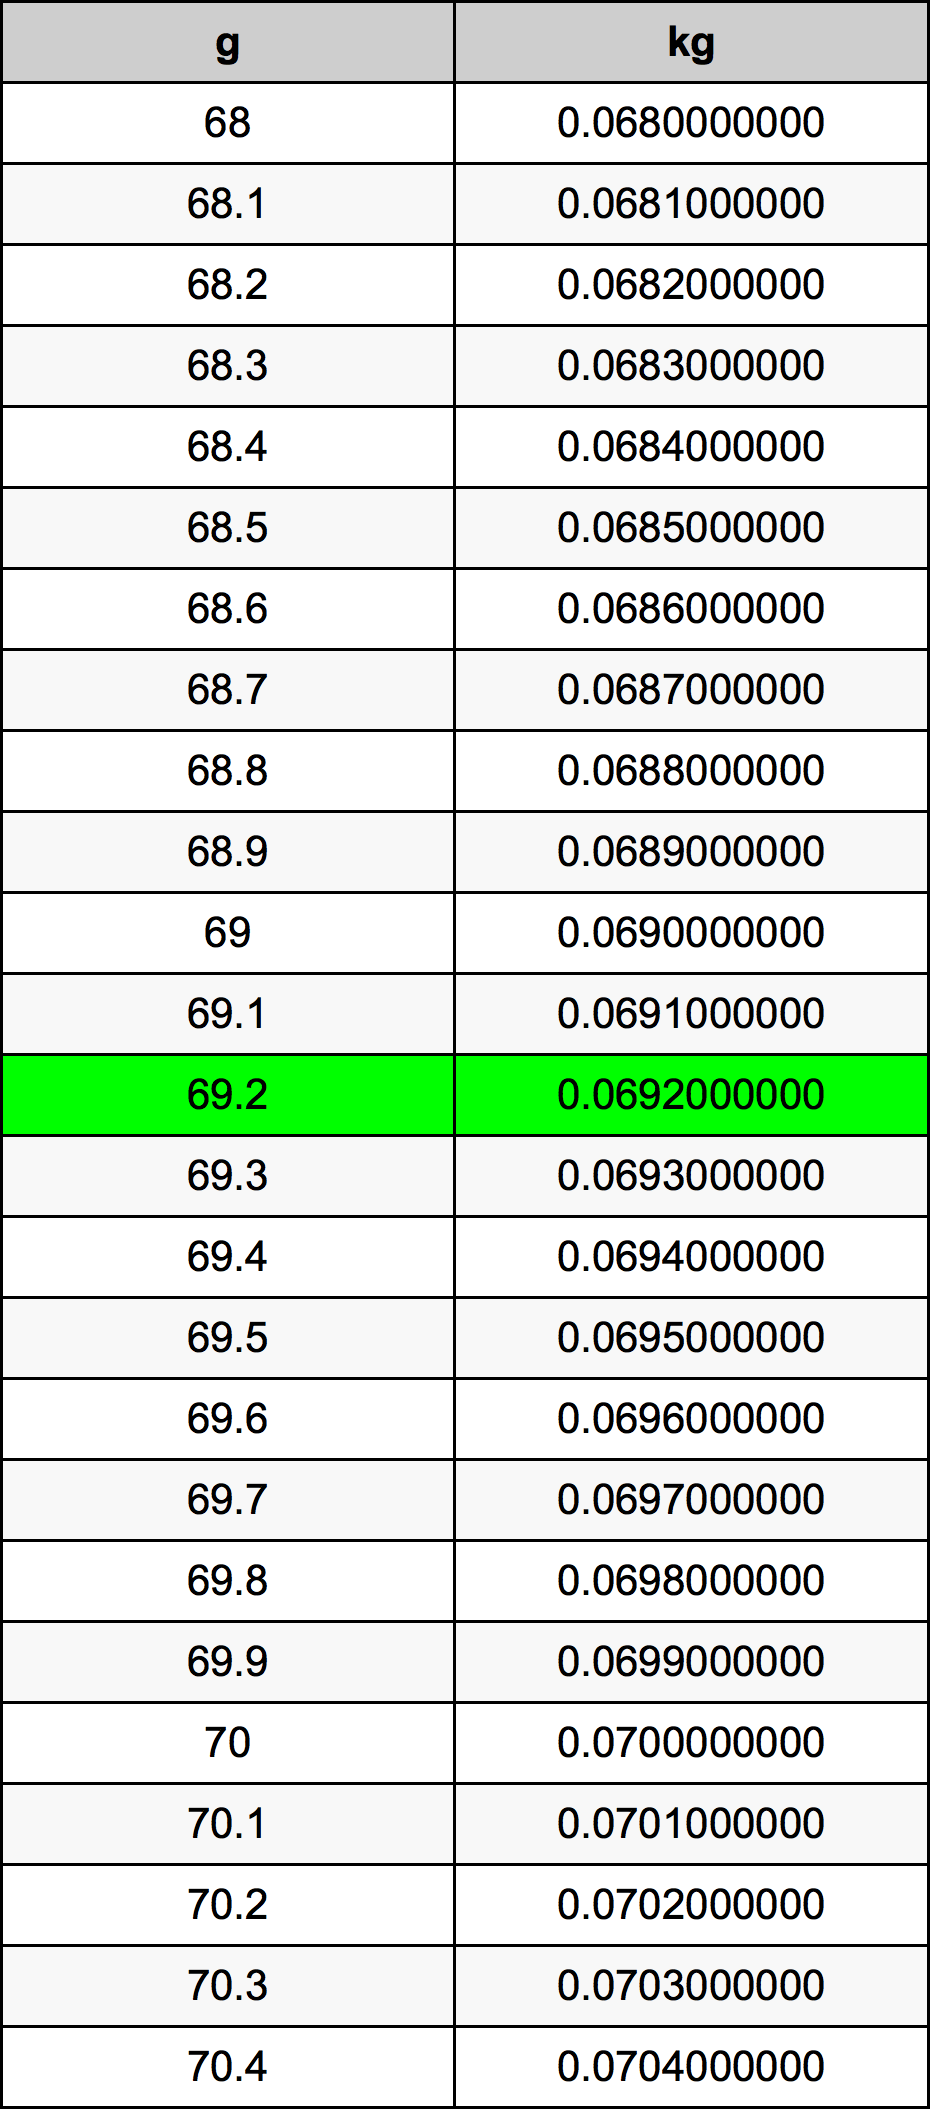 69.2 غرام جدول تحويل